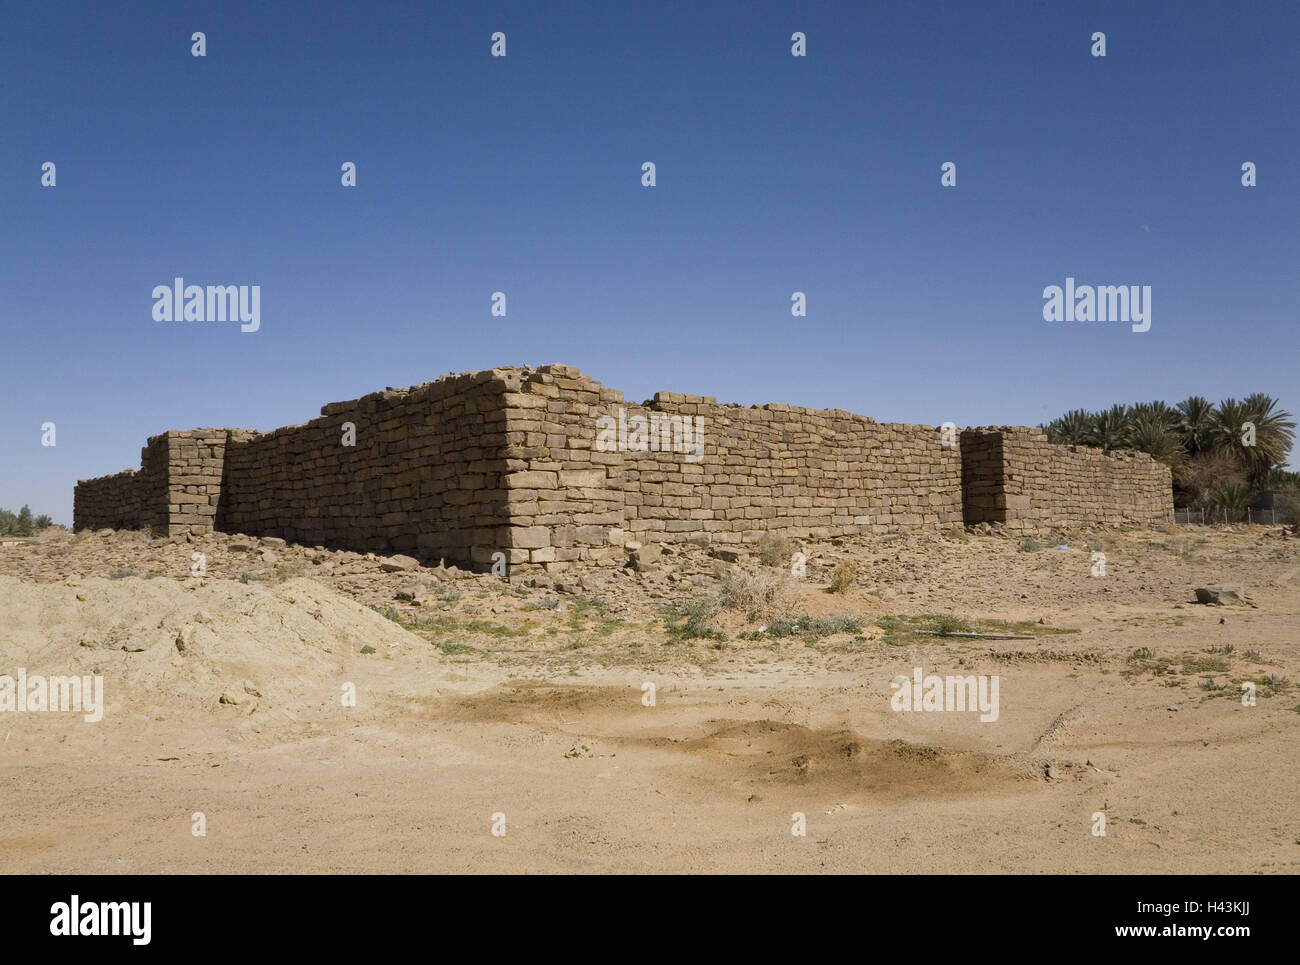 Saudi Arabia, province Tabuk, city Tayma, Stock Photo